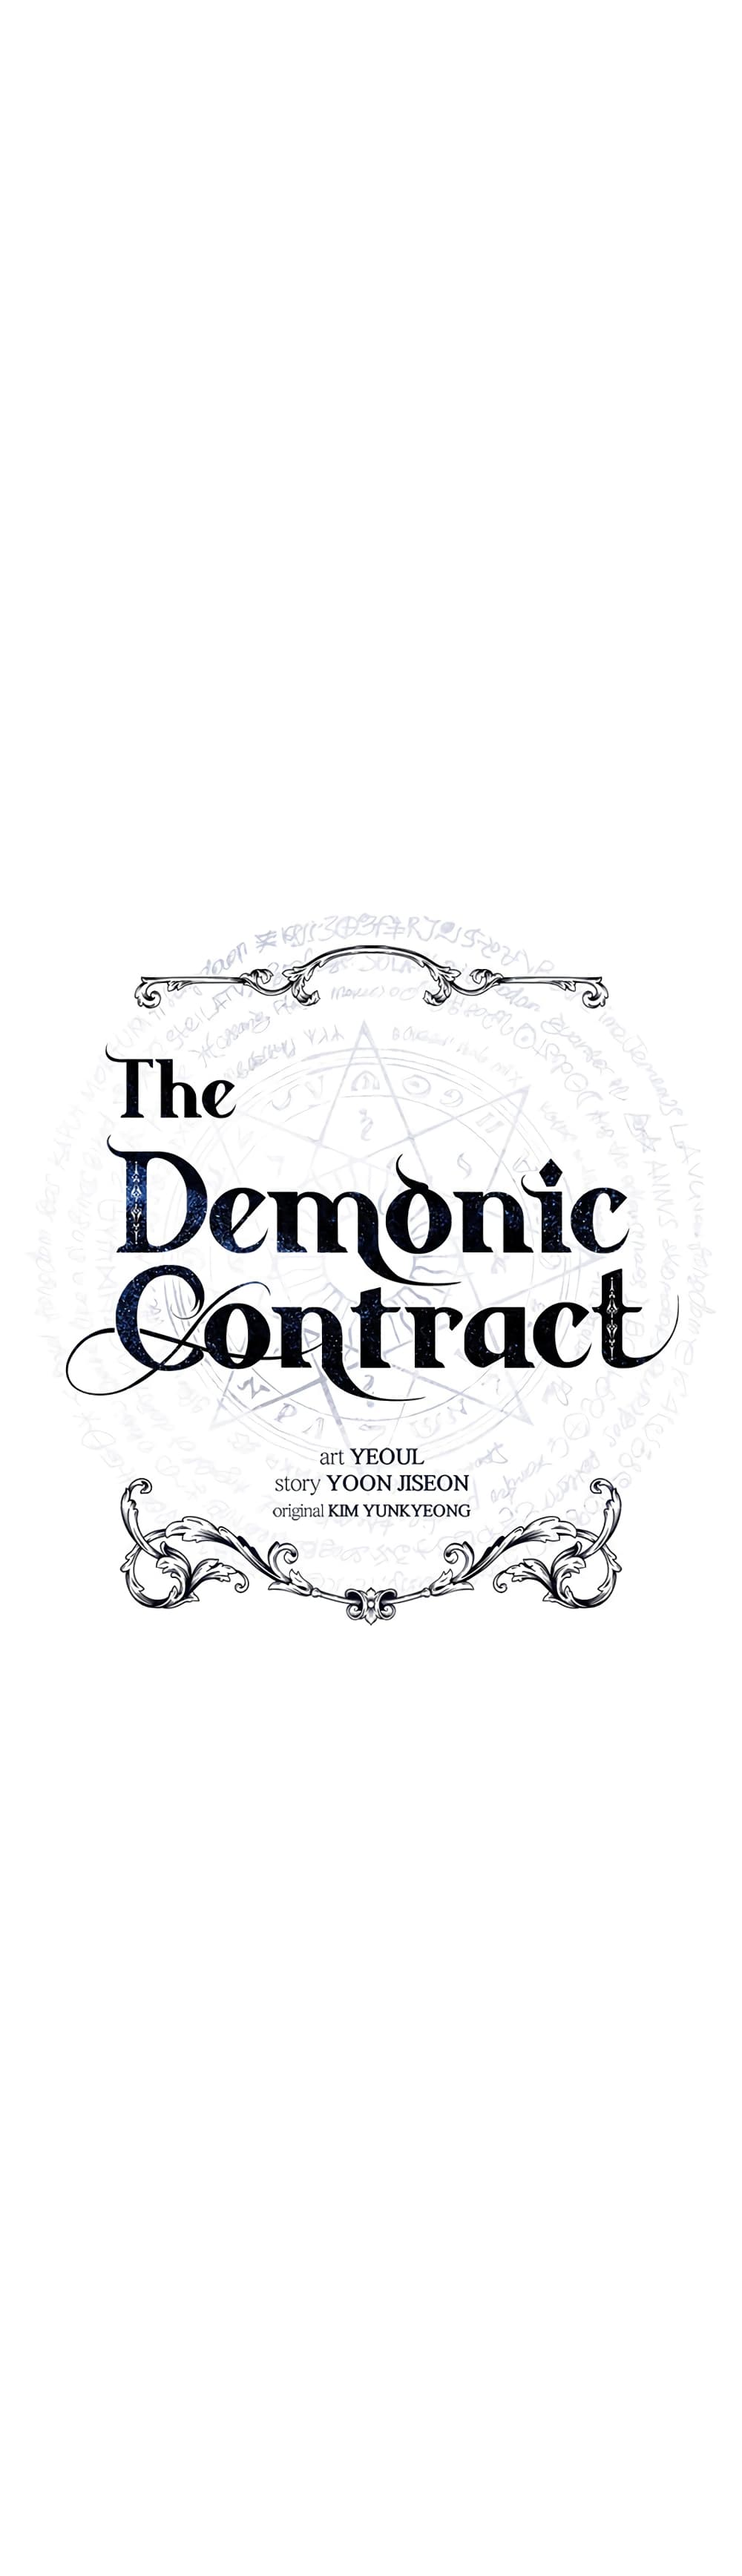 The Demonic Contract 45 (5)